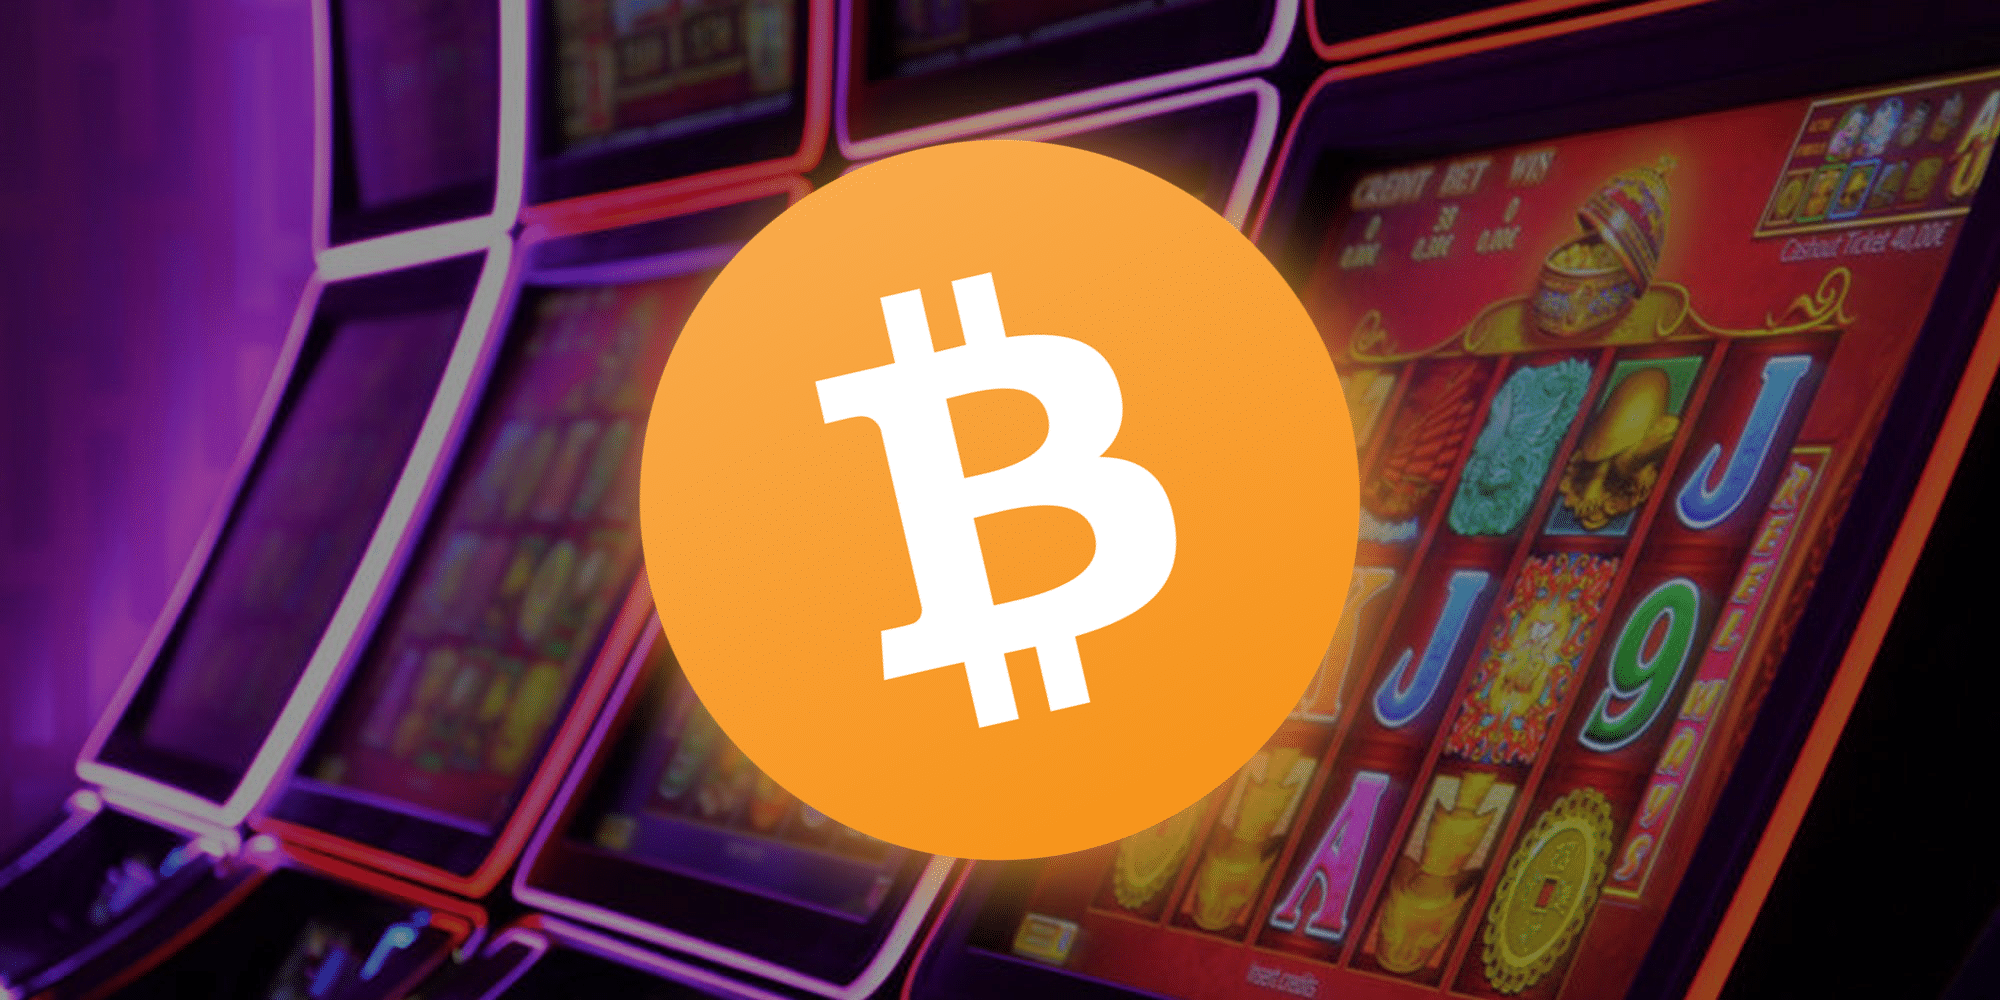 Space bitcoin casino